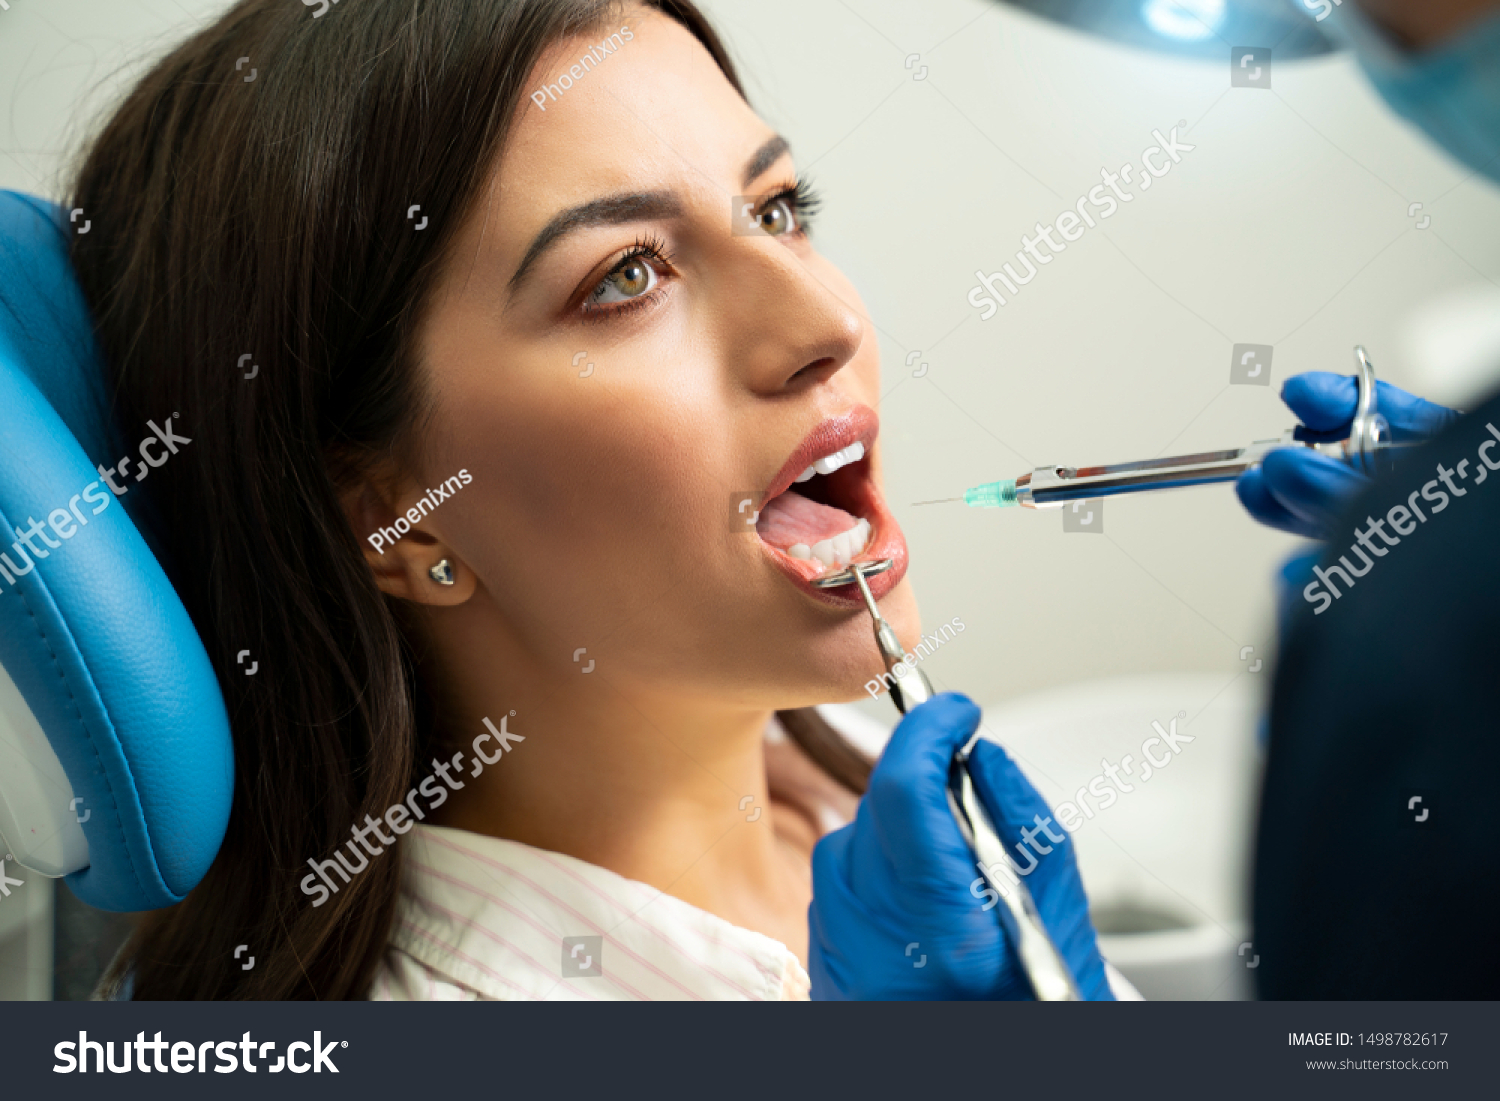 Young beautiful young adult woman getting dental anesthesia, closeup shot #1498782617